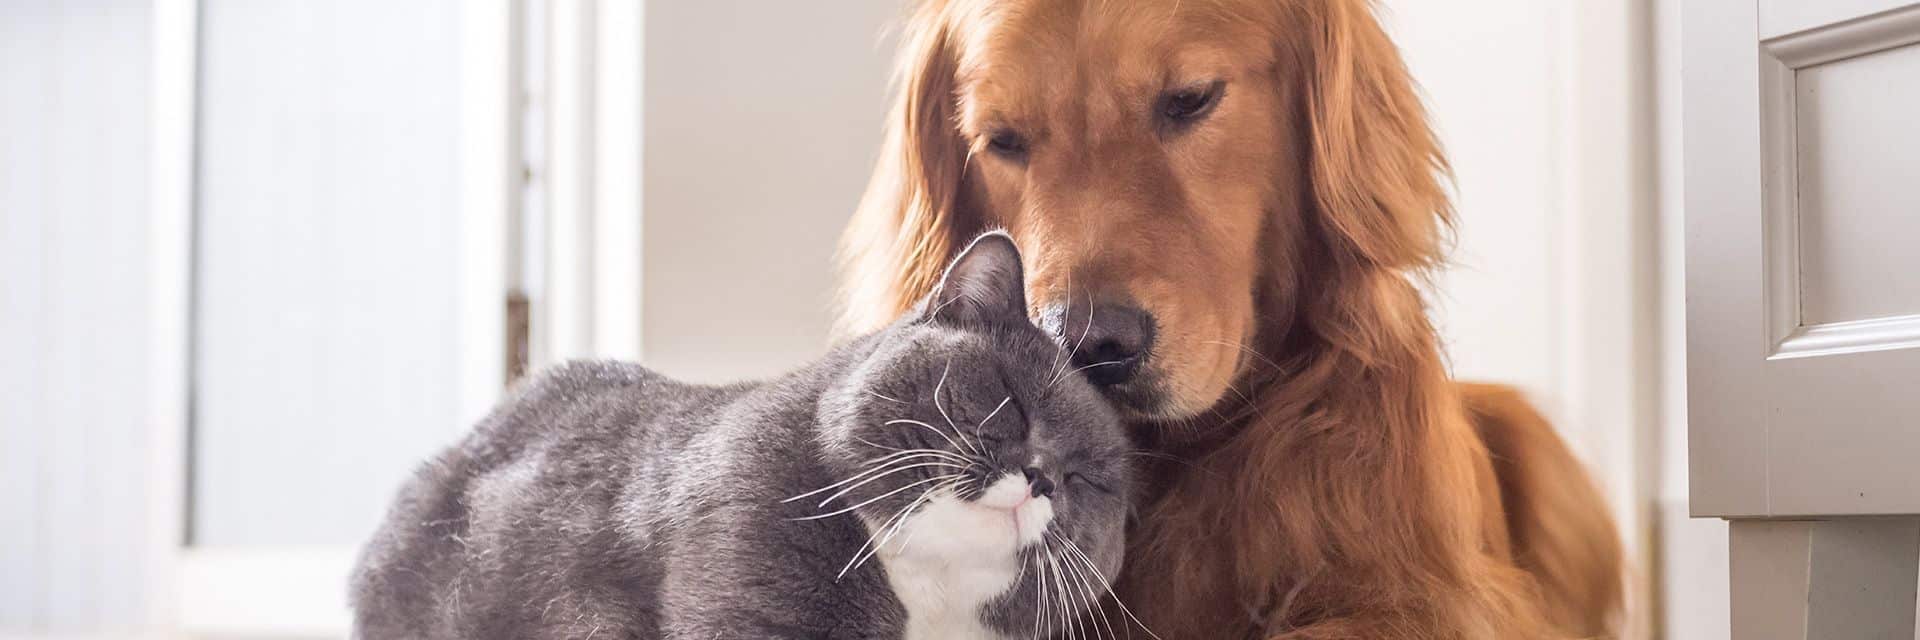 Hond en kat knuffelend